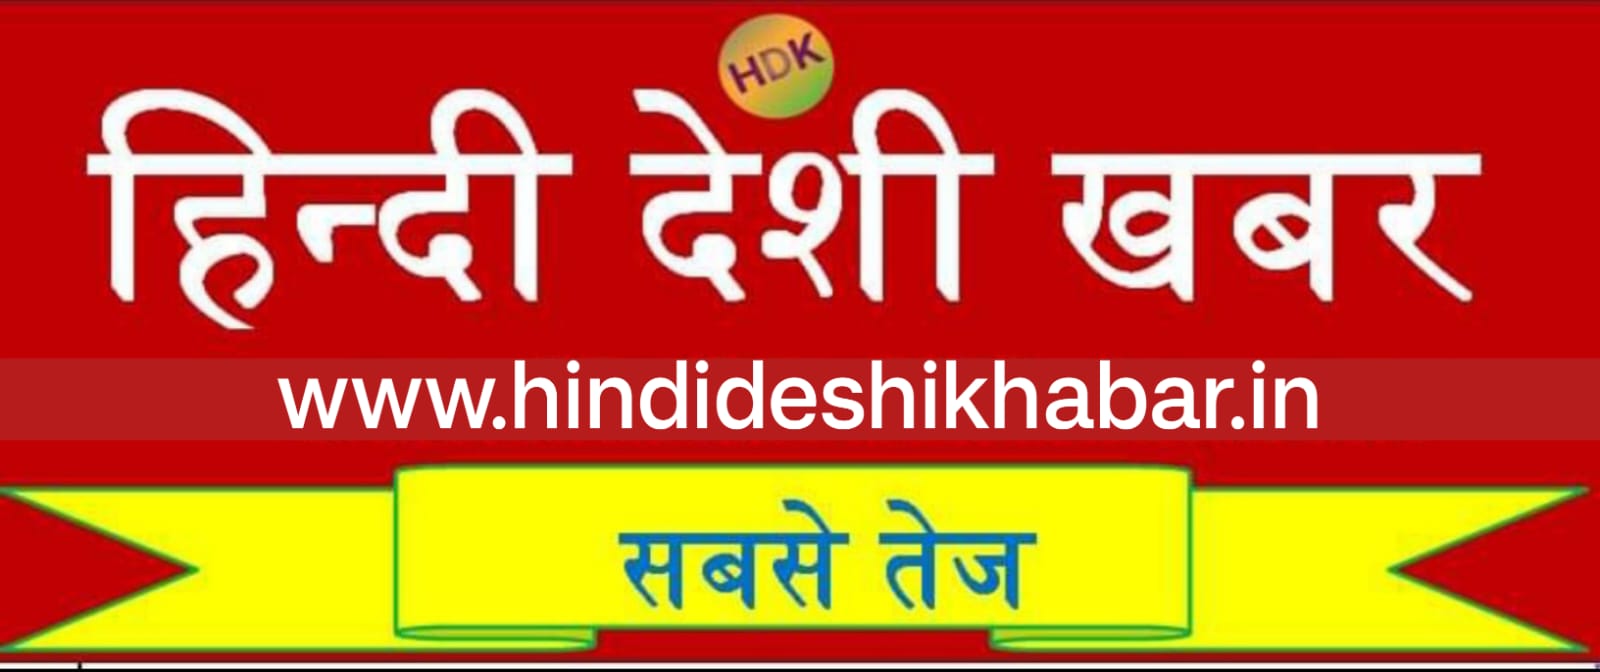 Hindi Deshi Khabar -News & Media